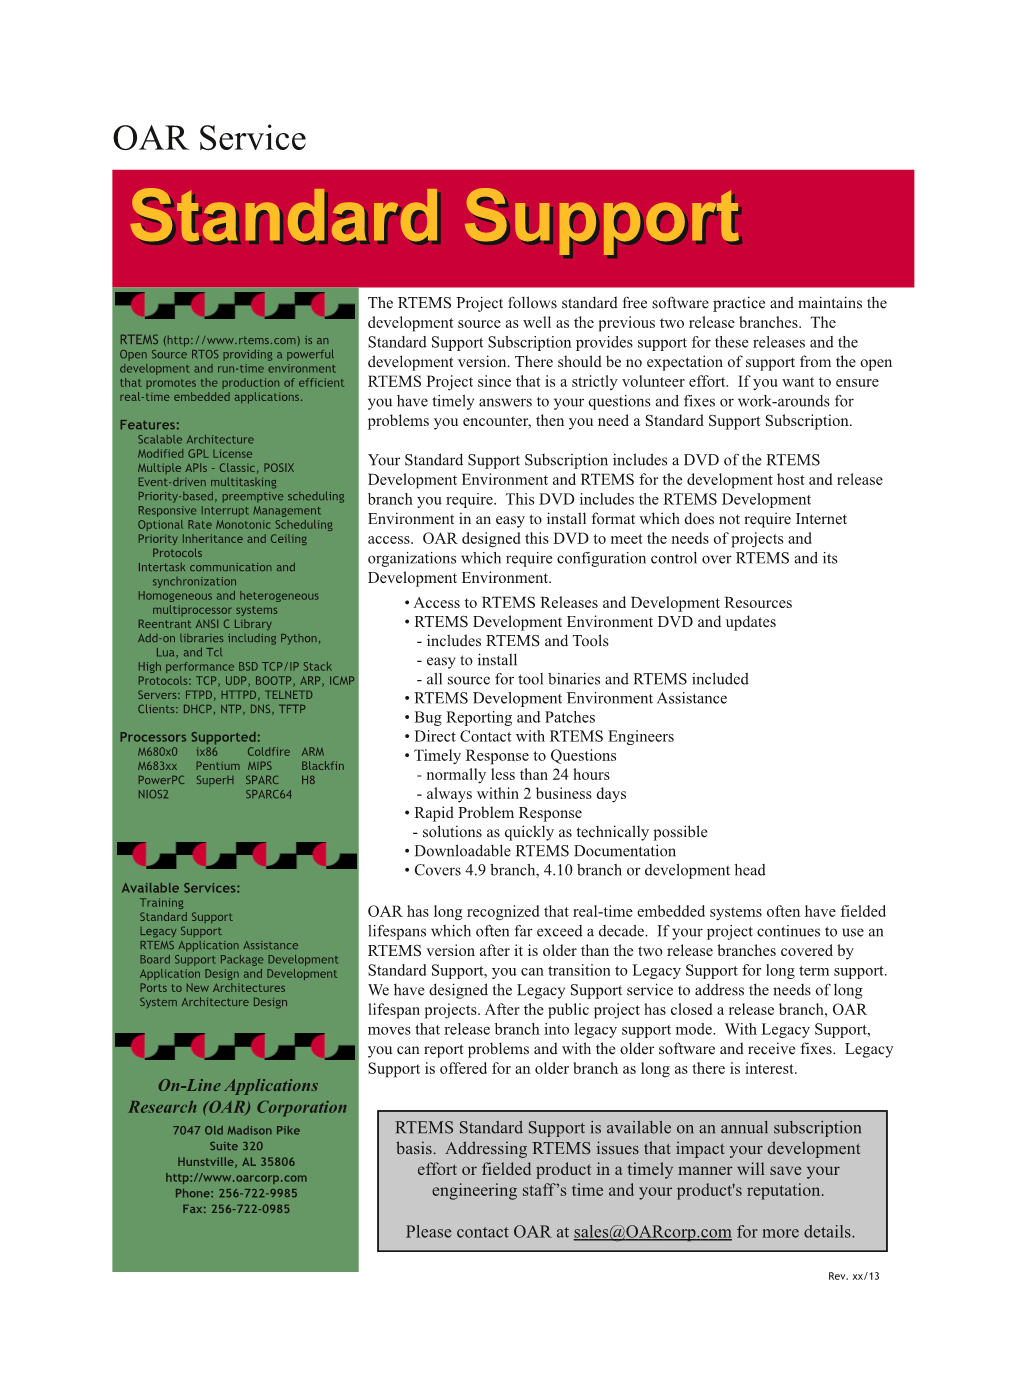 Standard Support